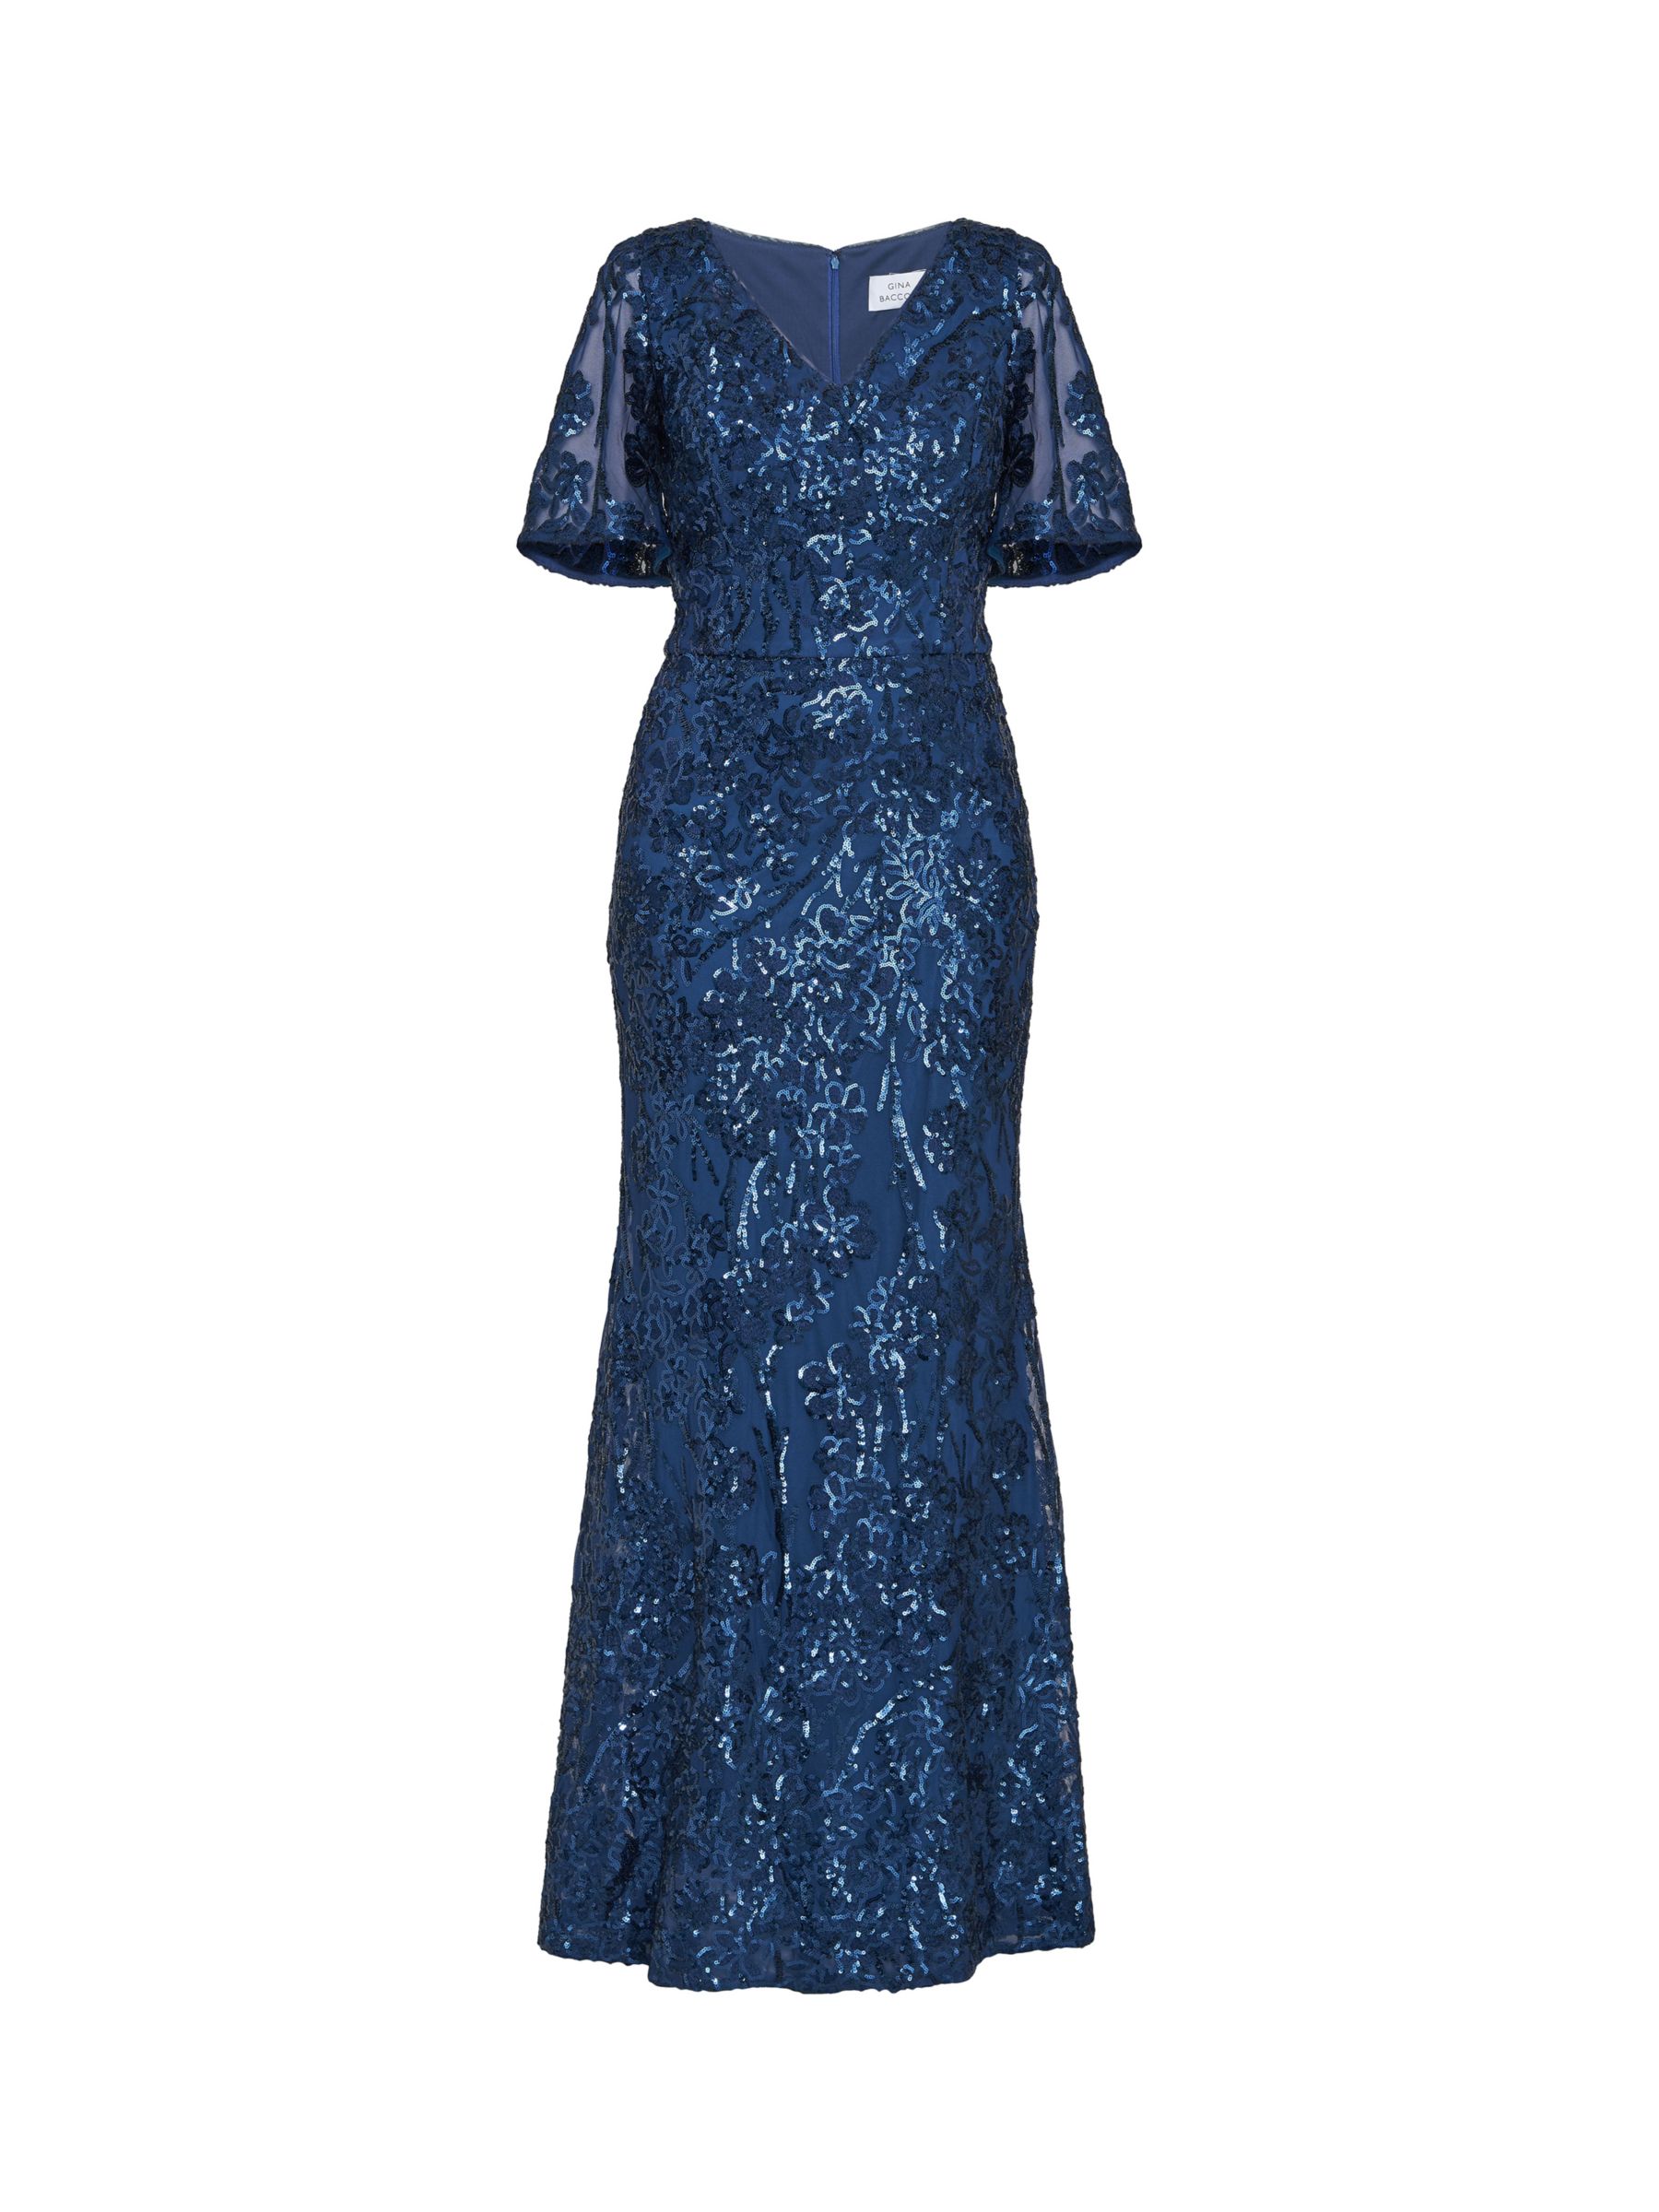 Gina Bacconi Jeselle Floral Sequin Evening Dress, Navy at John Lewis ...